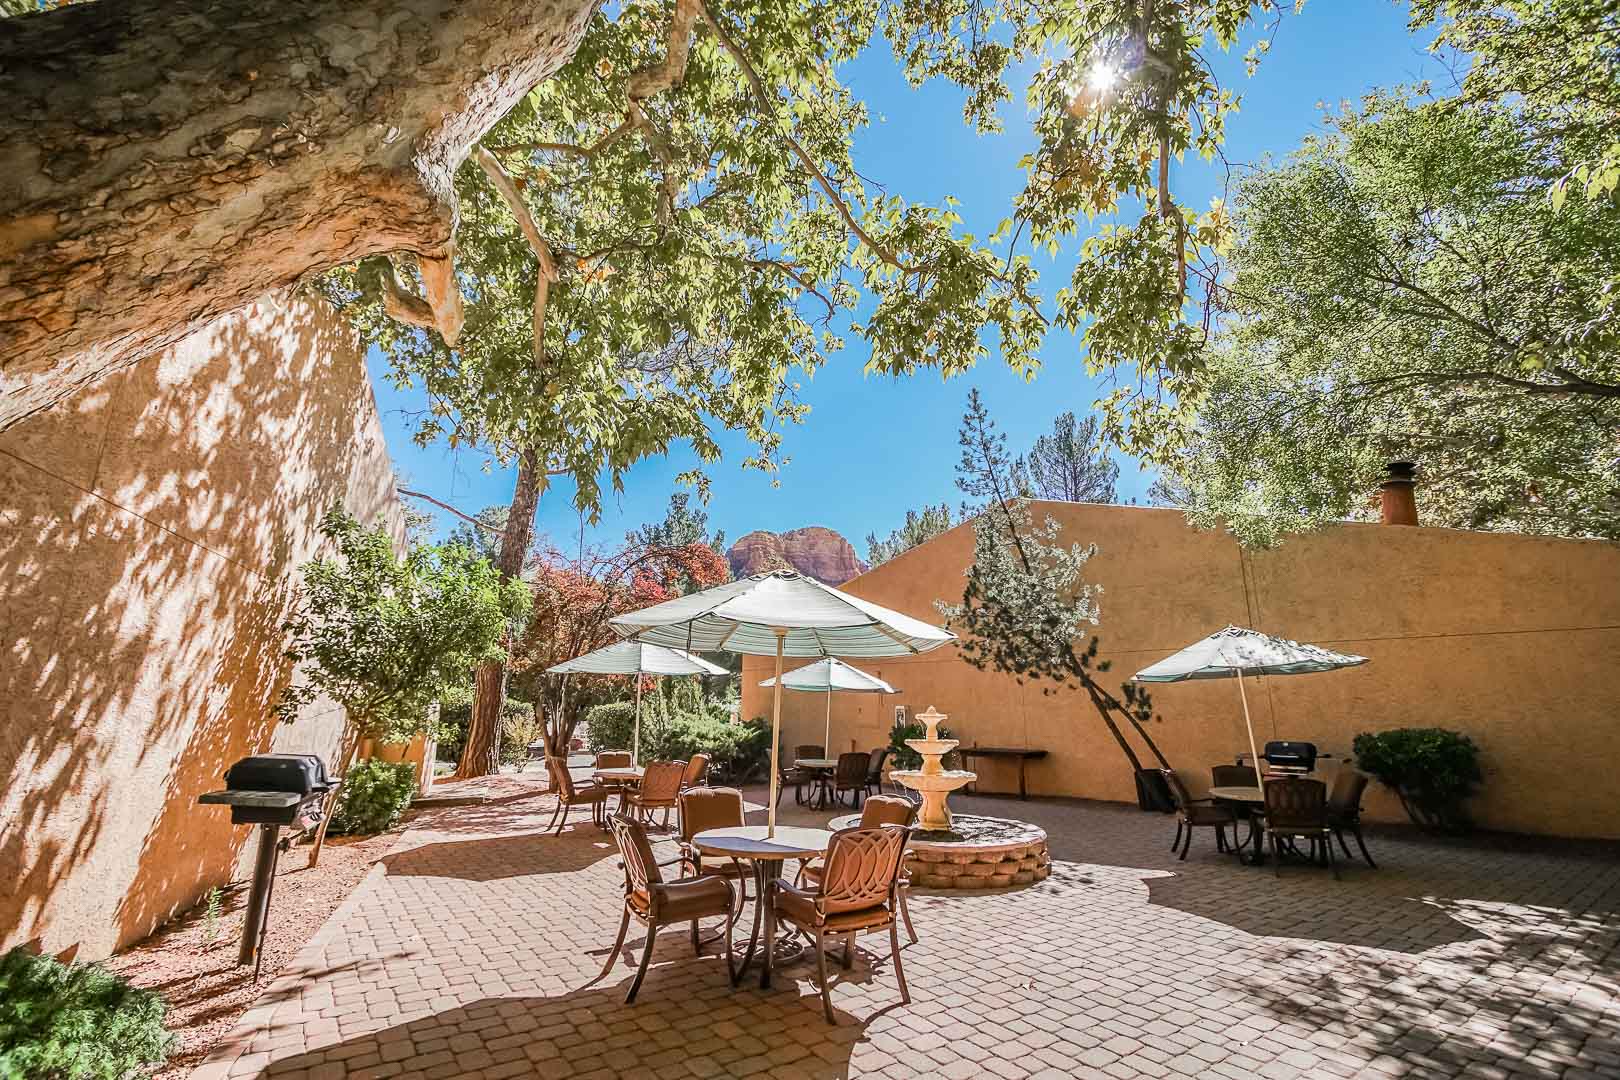 A peaceful view of the outdoor tables at VRI's Villas at Poco Diablo in Sedona, Arizona.